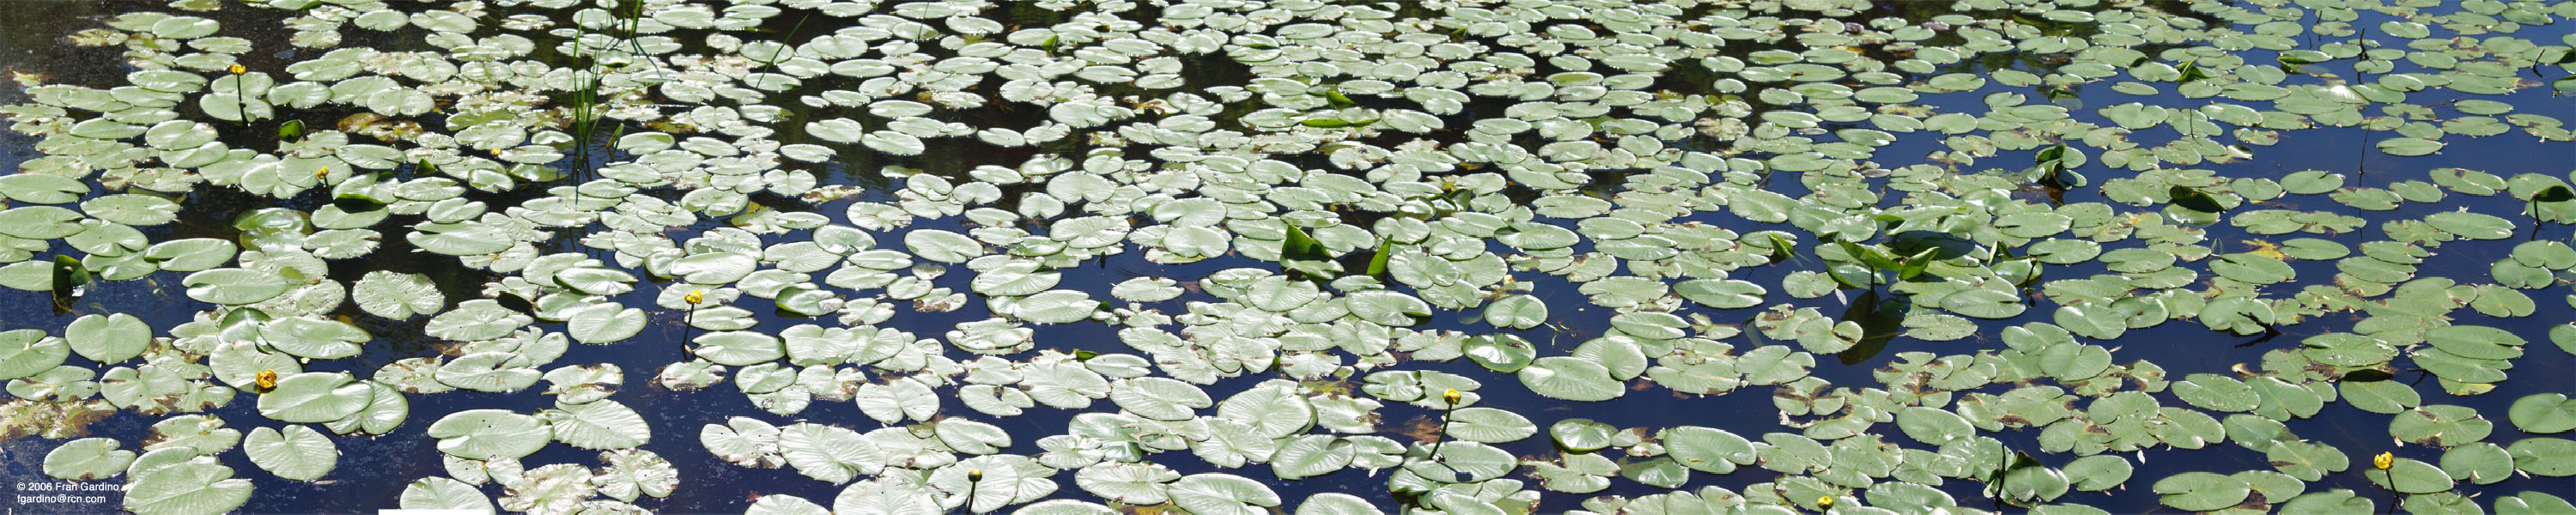 Mystic Pond Lily Pads